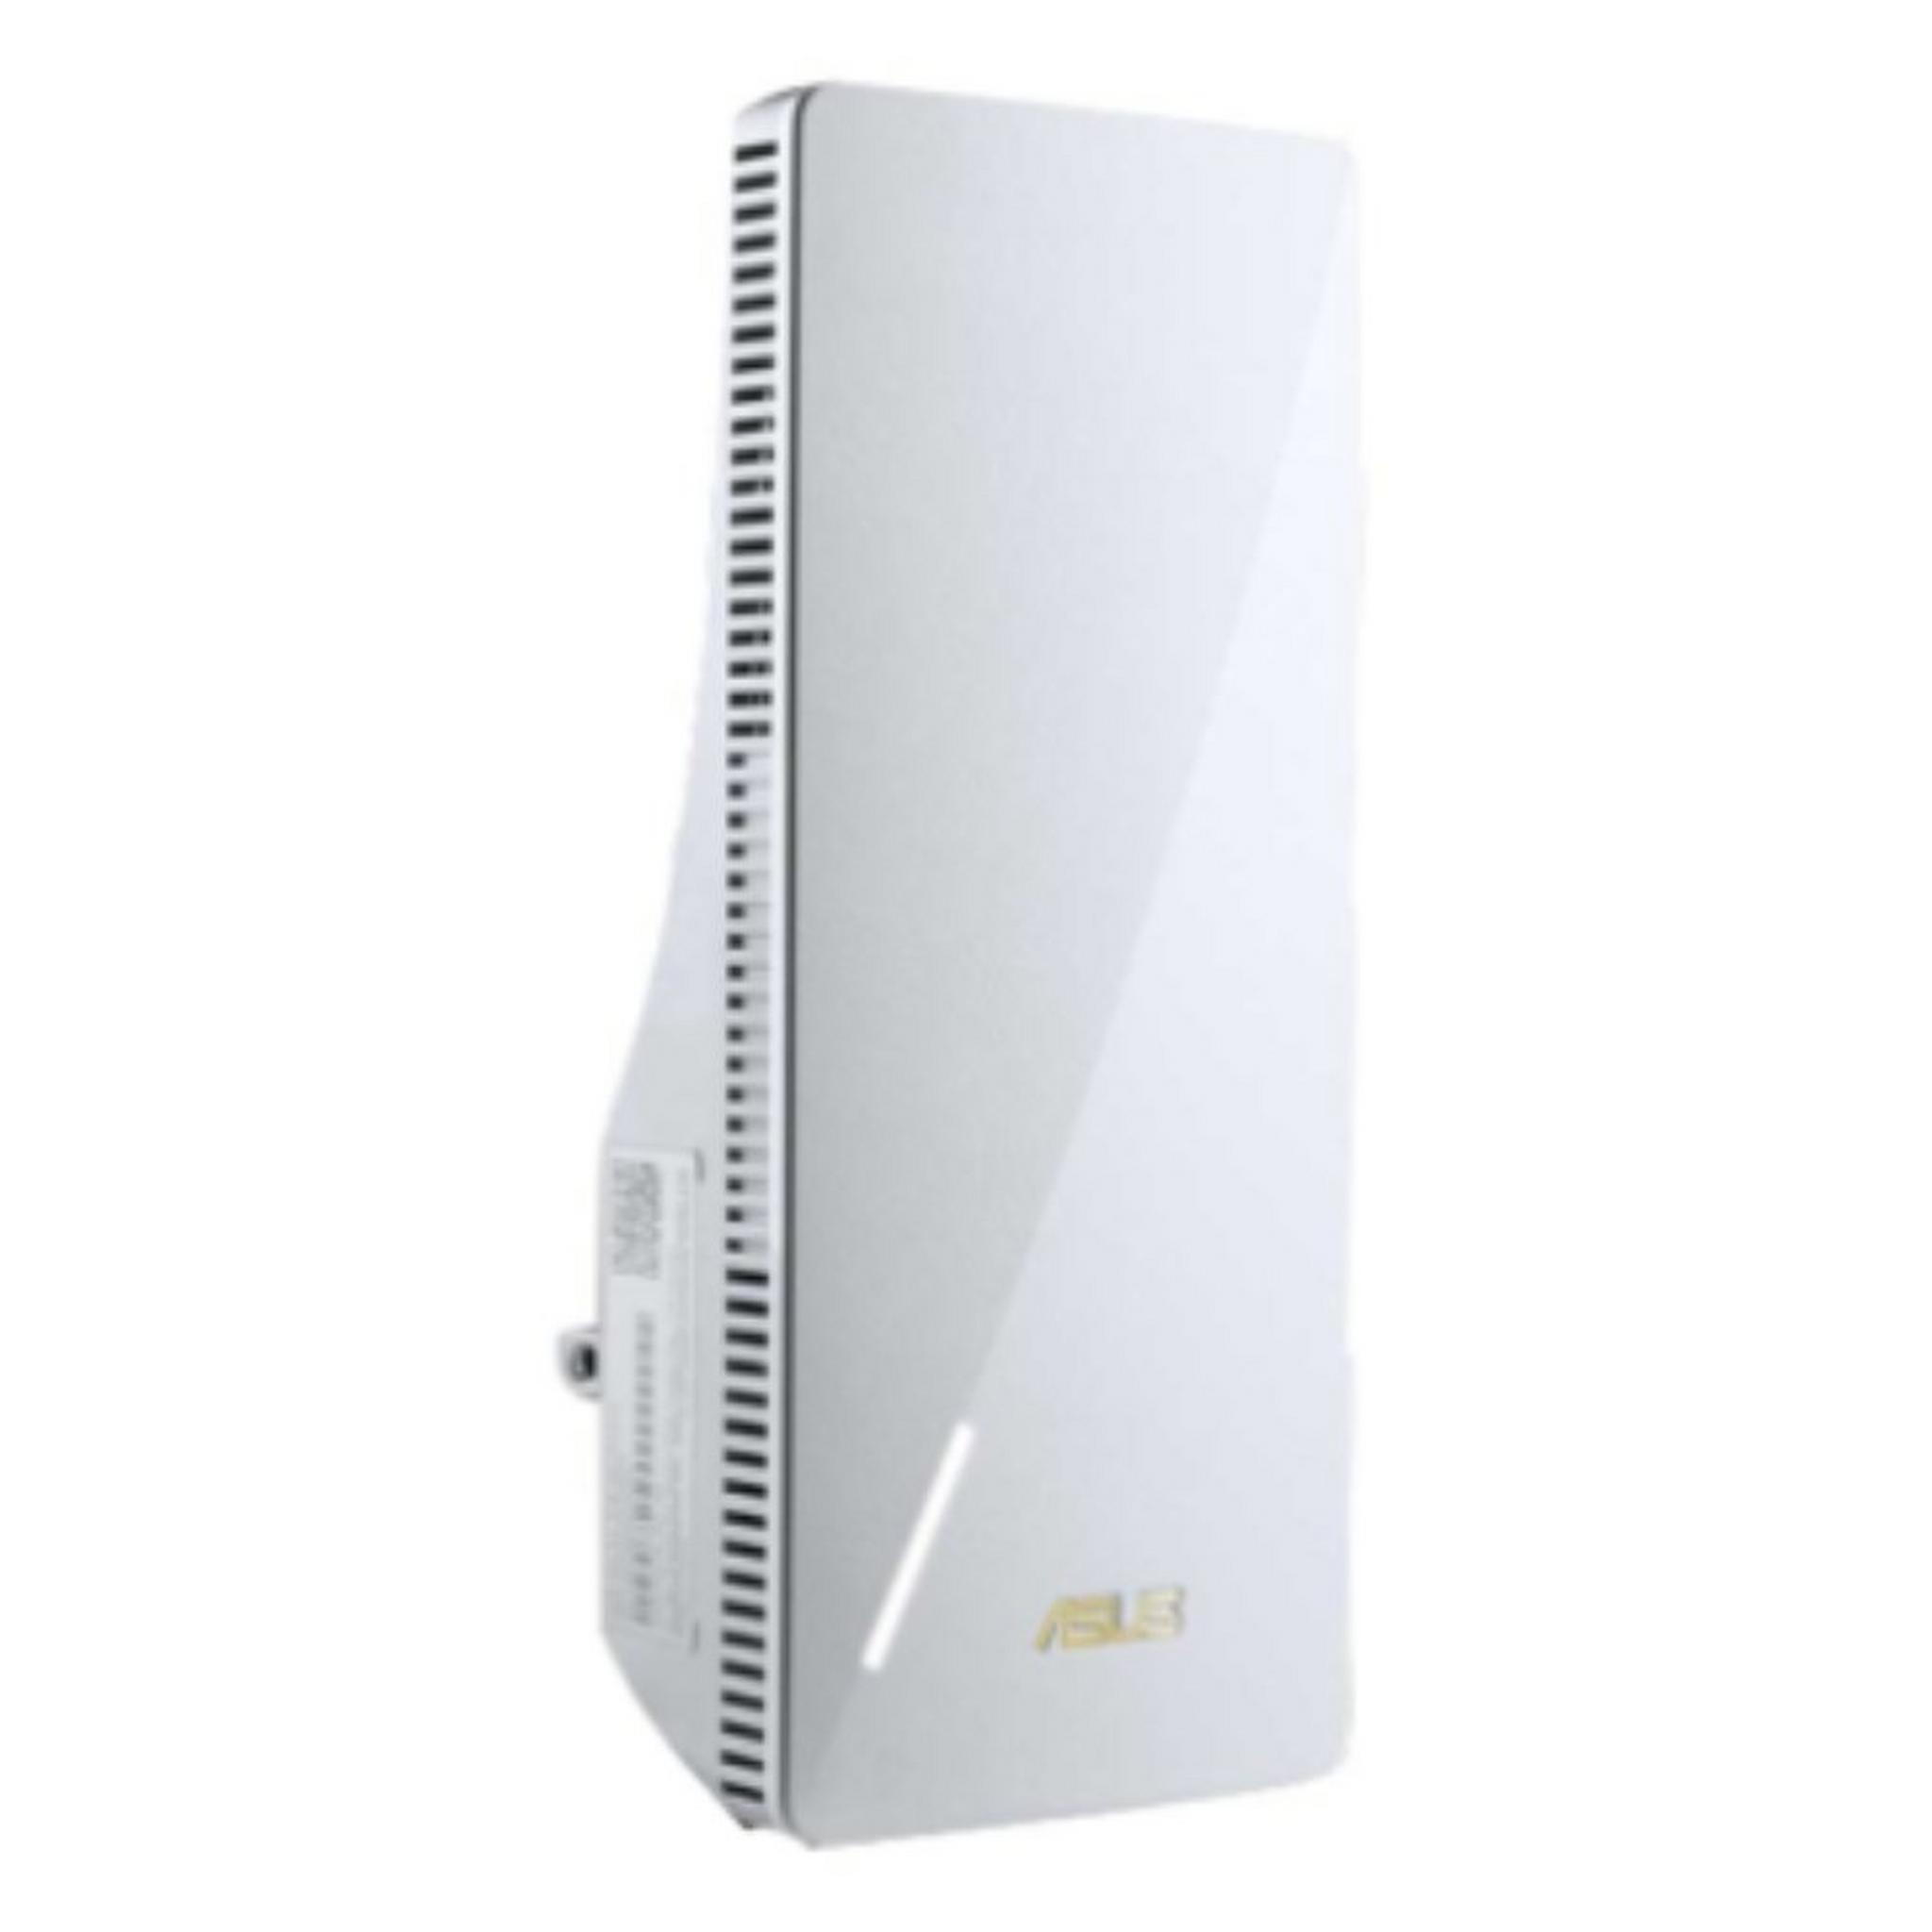 Asus WiFi 6 Dual Band Range Extender - RP-AX56